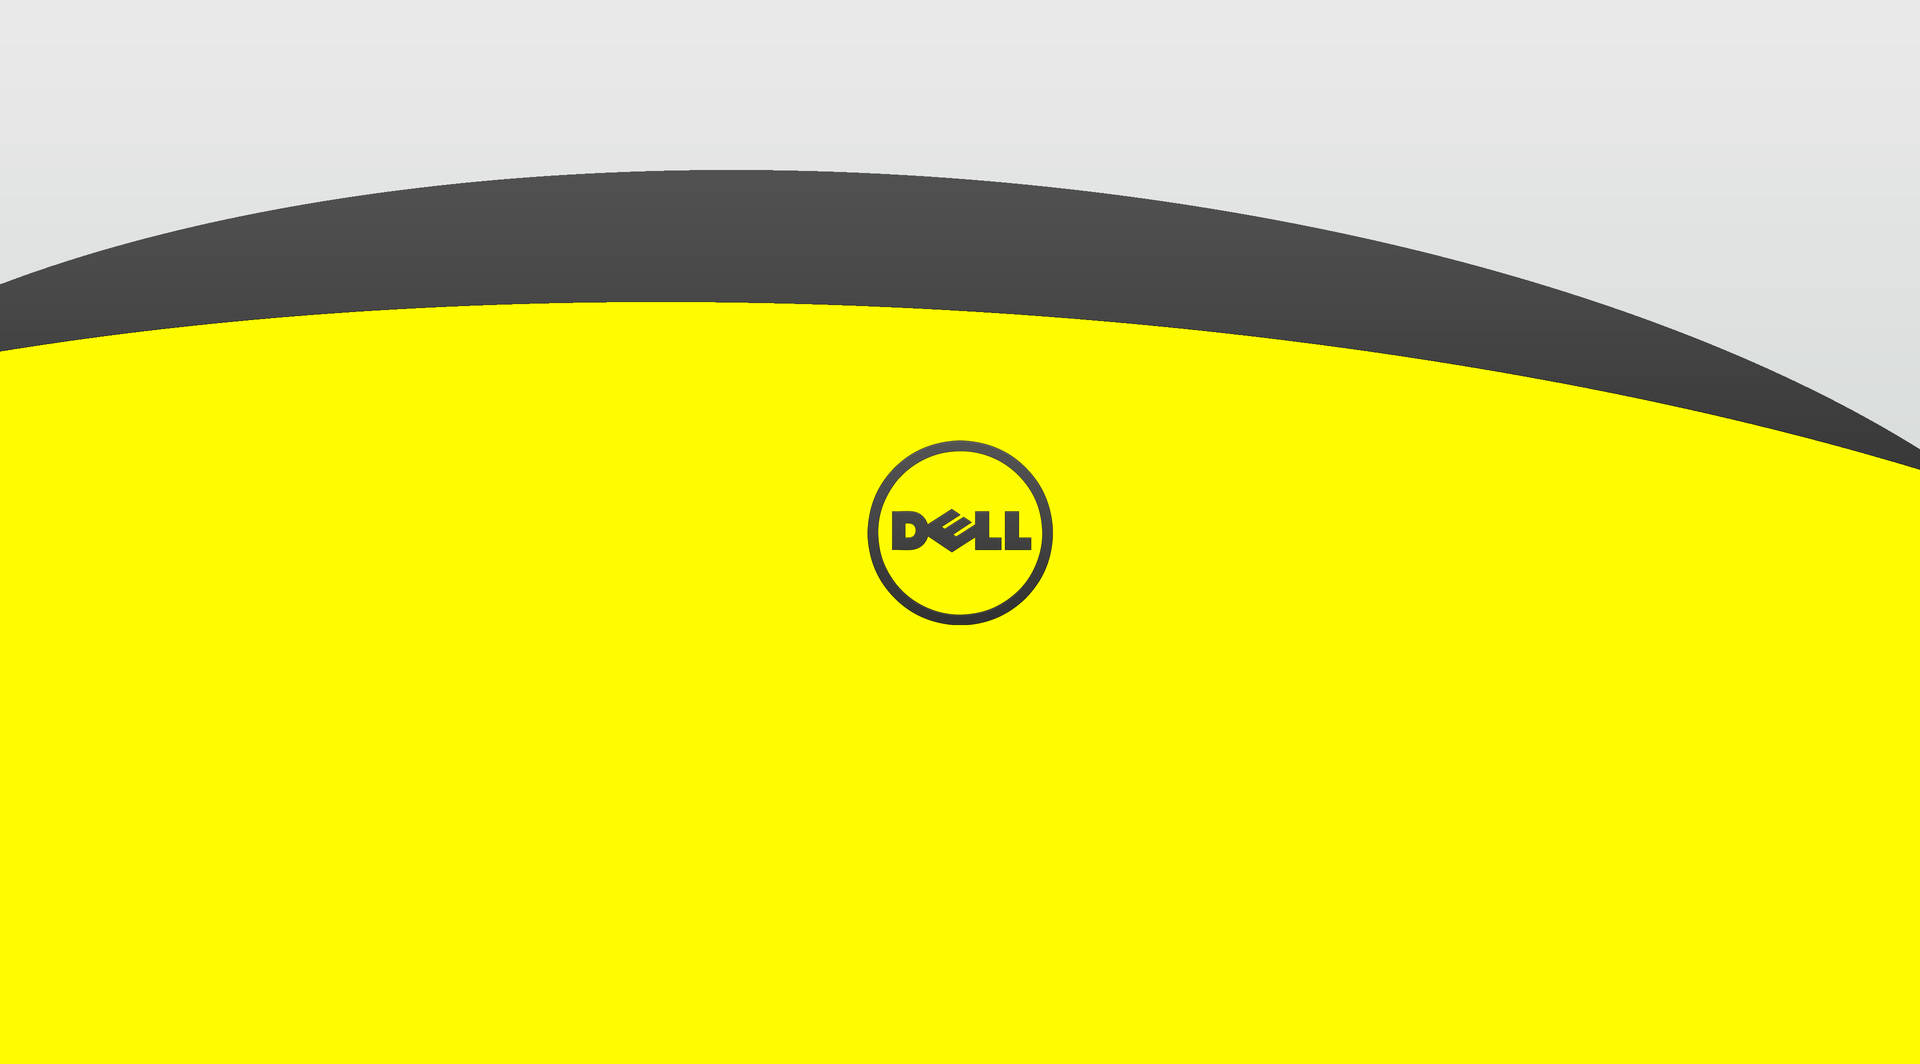 Dell 4k Logo On Yellow